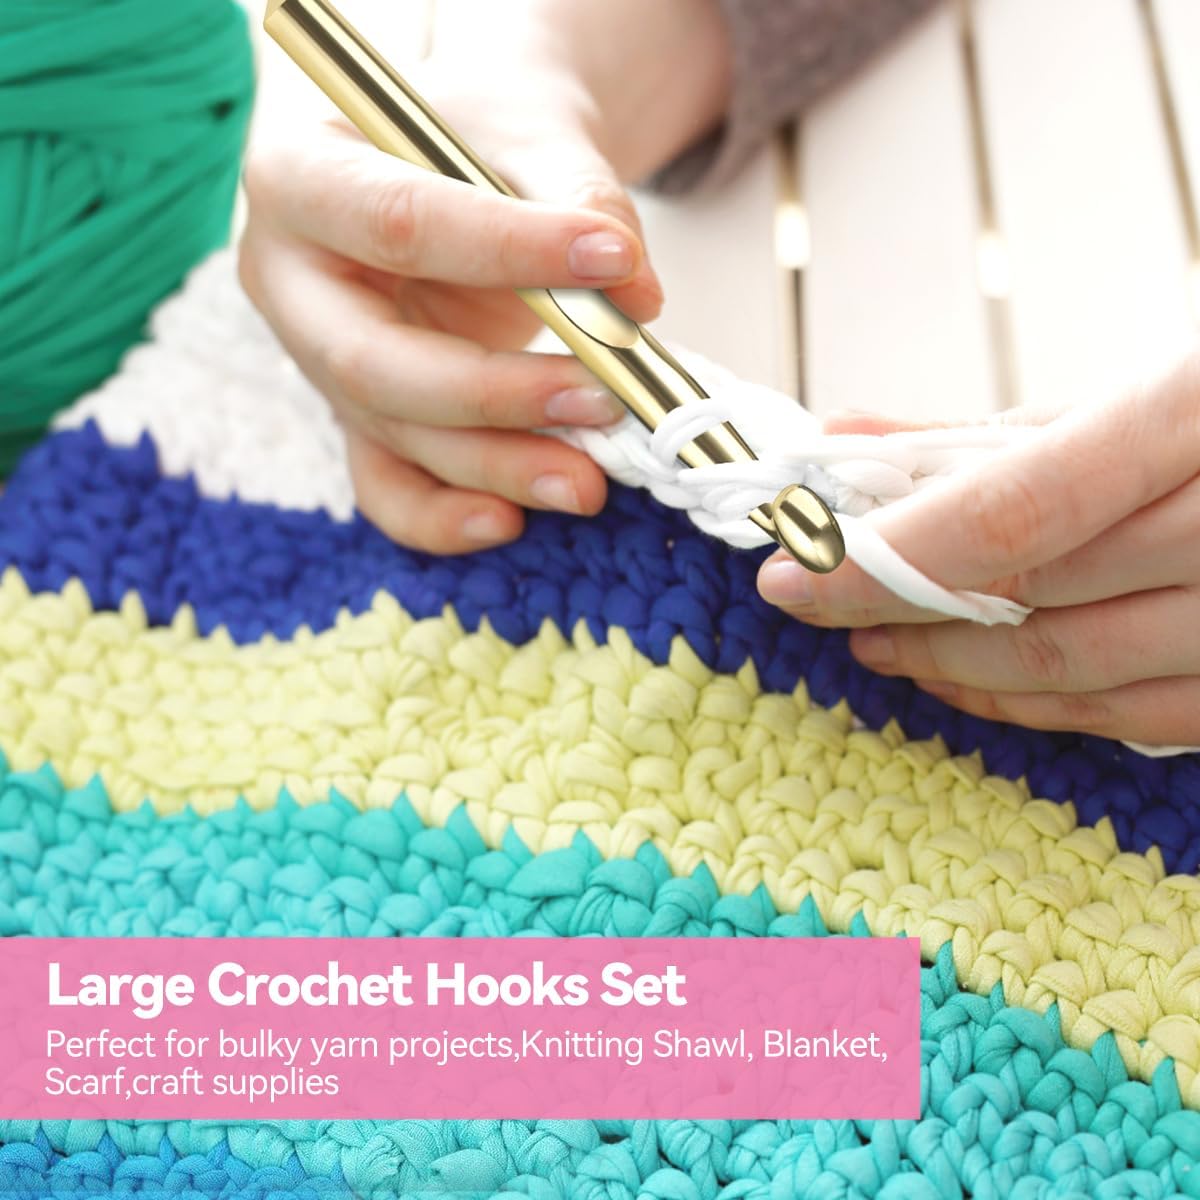 36PCS Large Crochet Hooks Set 6.5MM-15MM Crochet Needles and Accessories